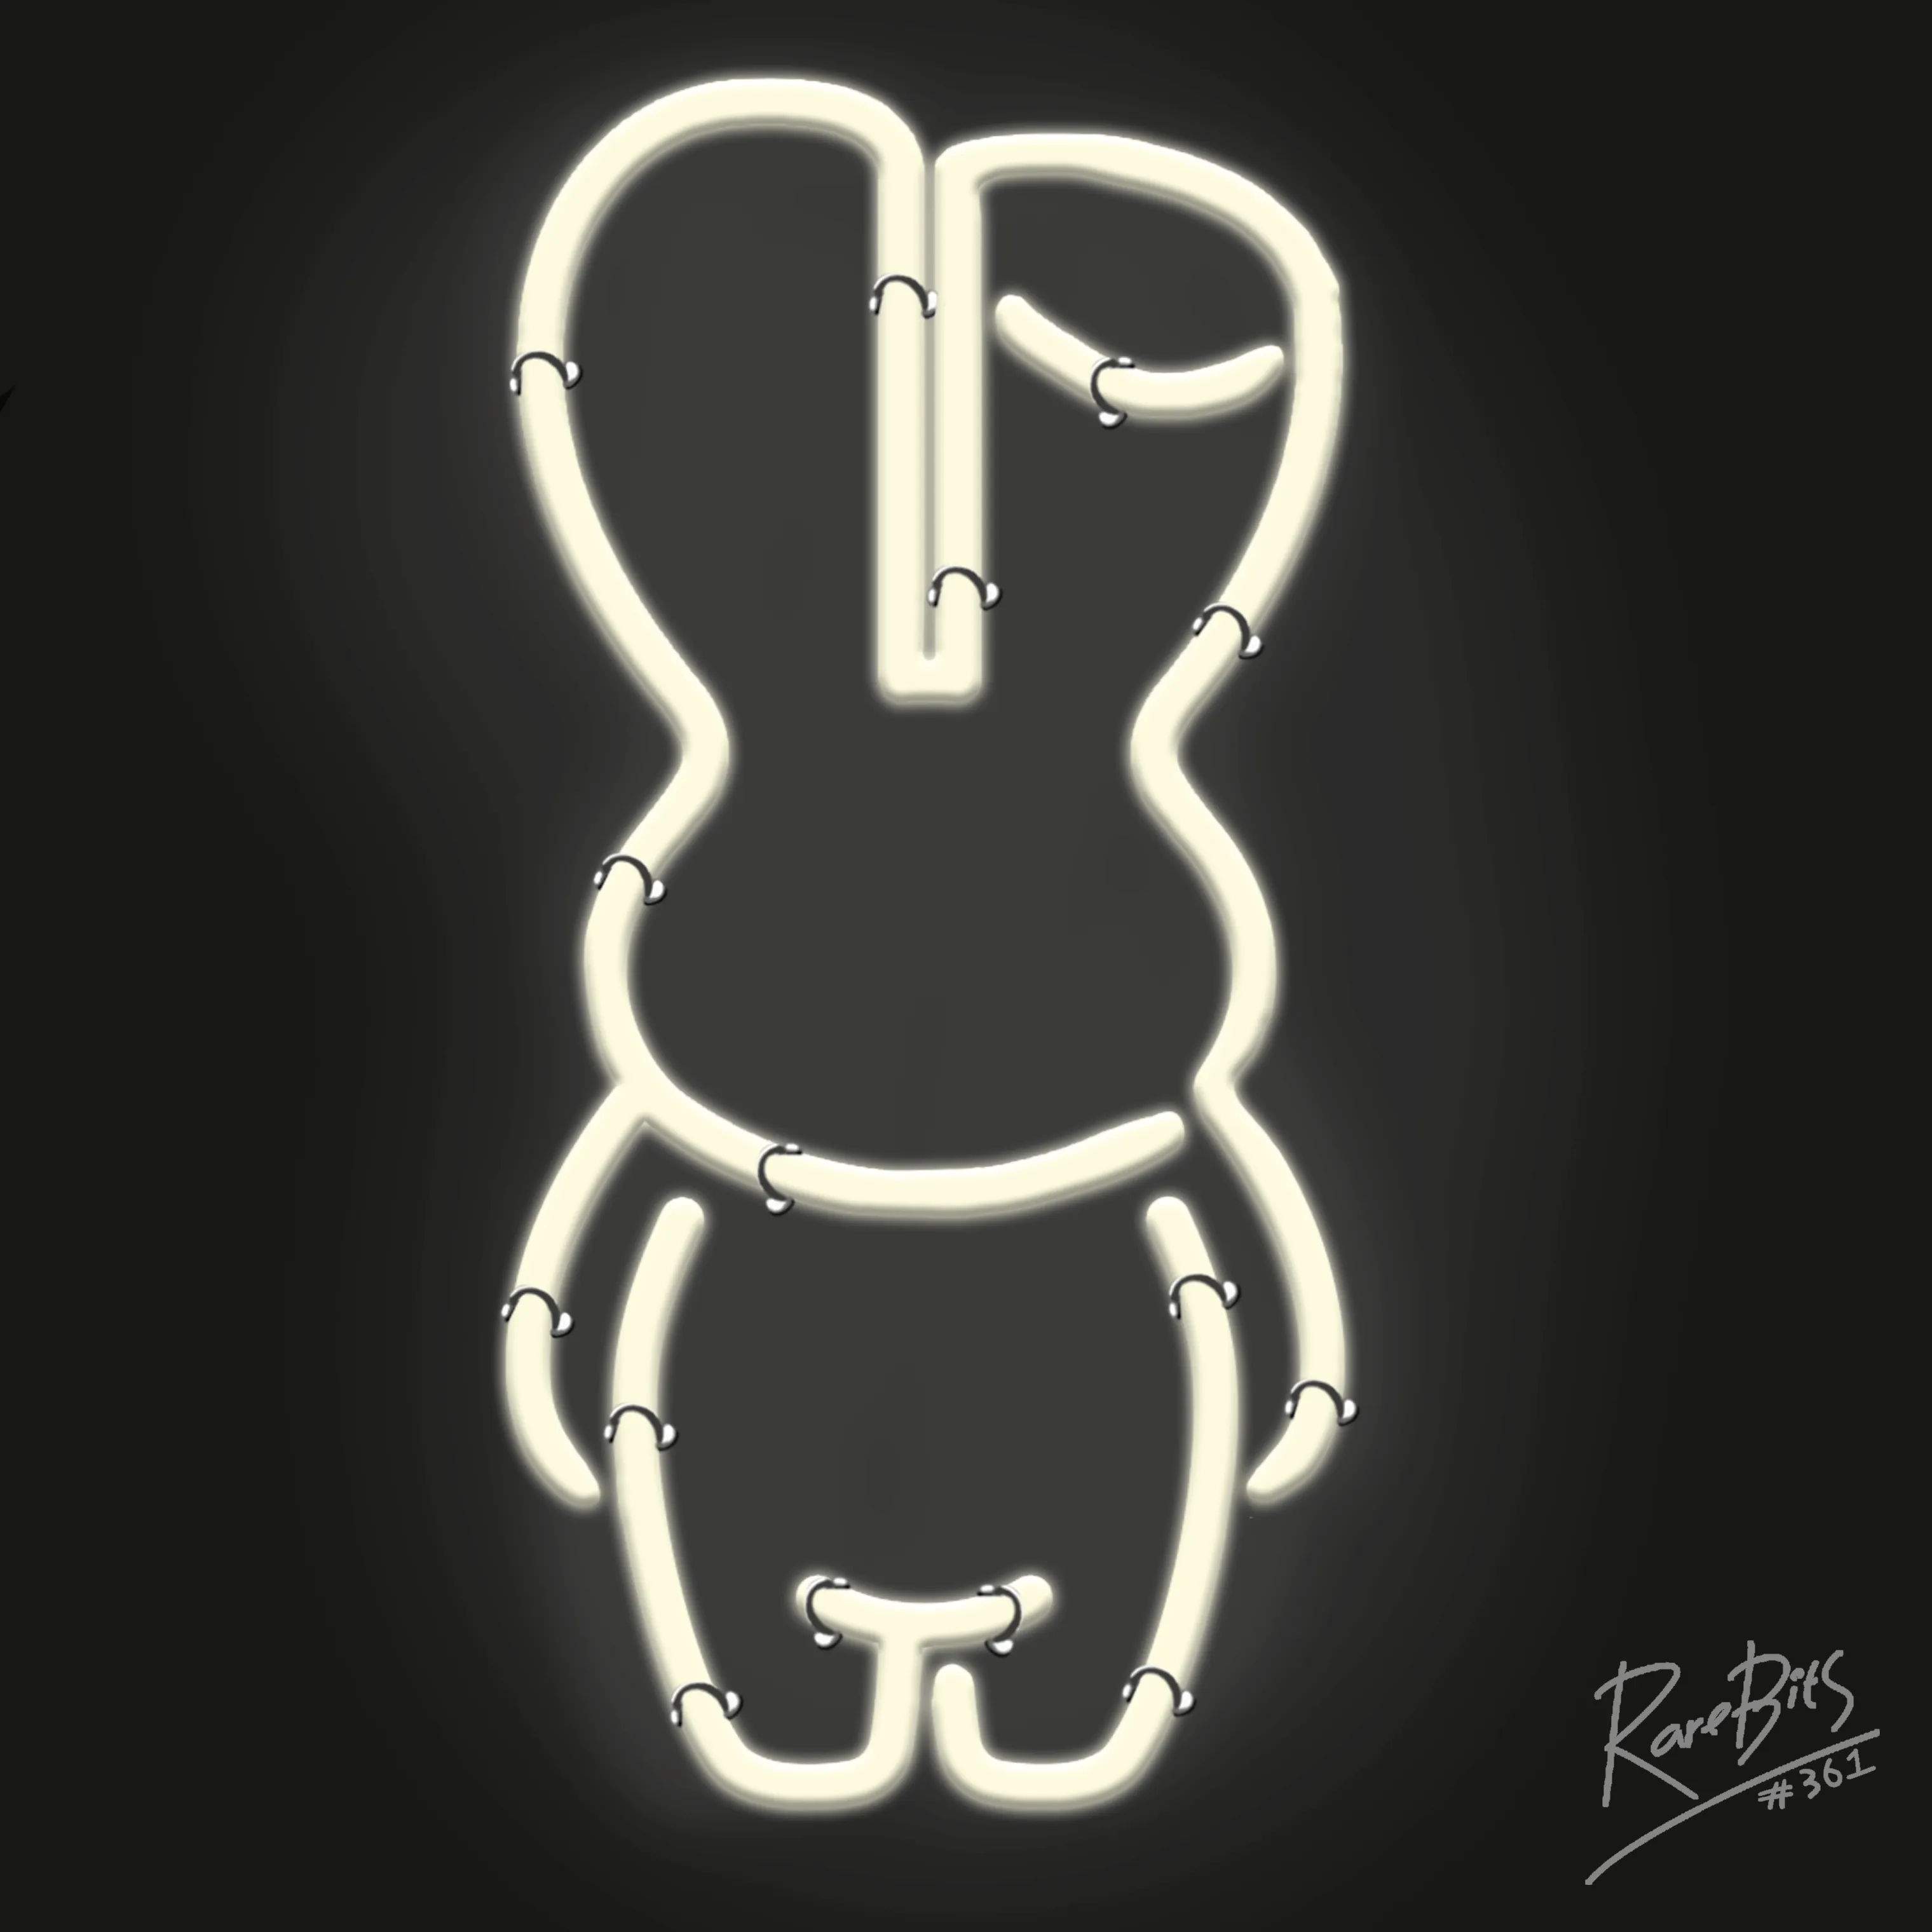 Rarebit #361 - Neon Glow Bunny